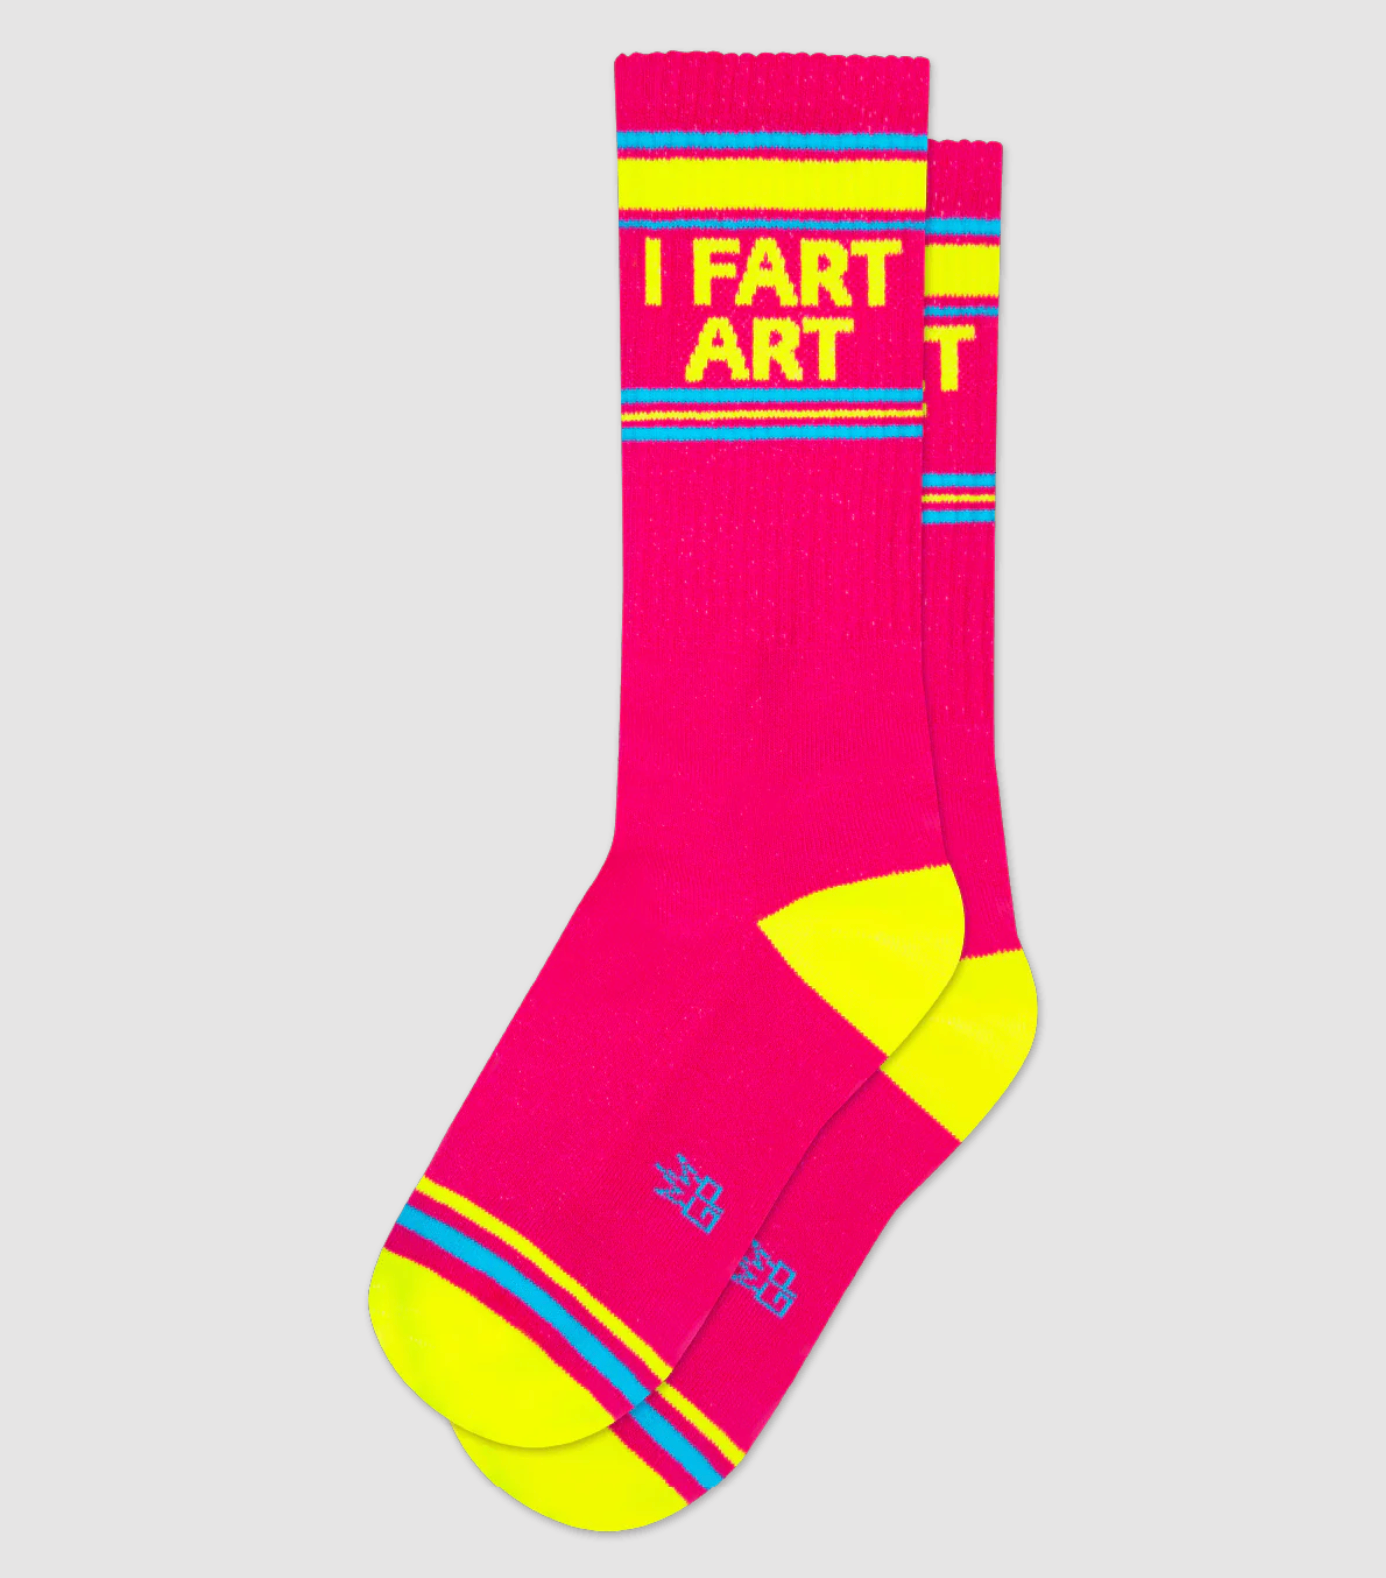 I FART ART gym socks